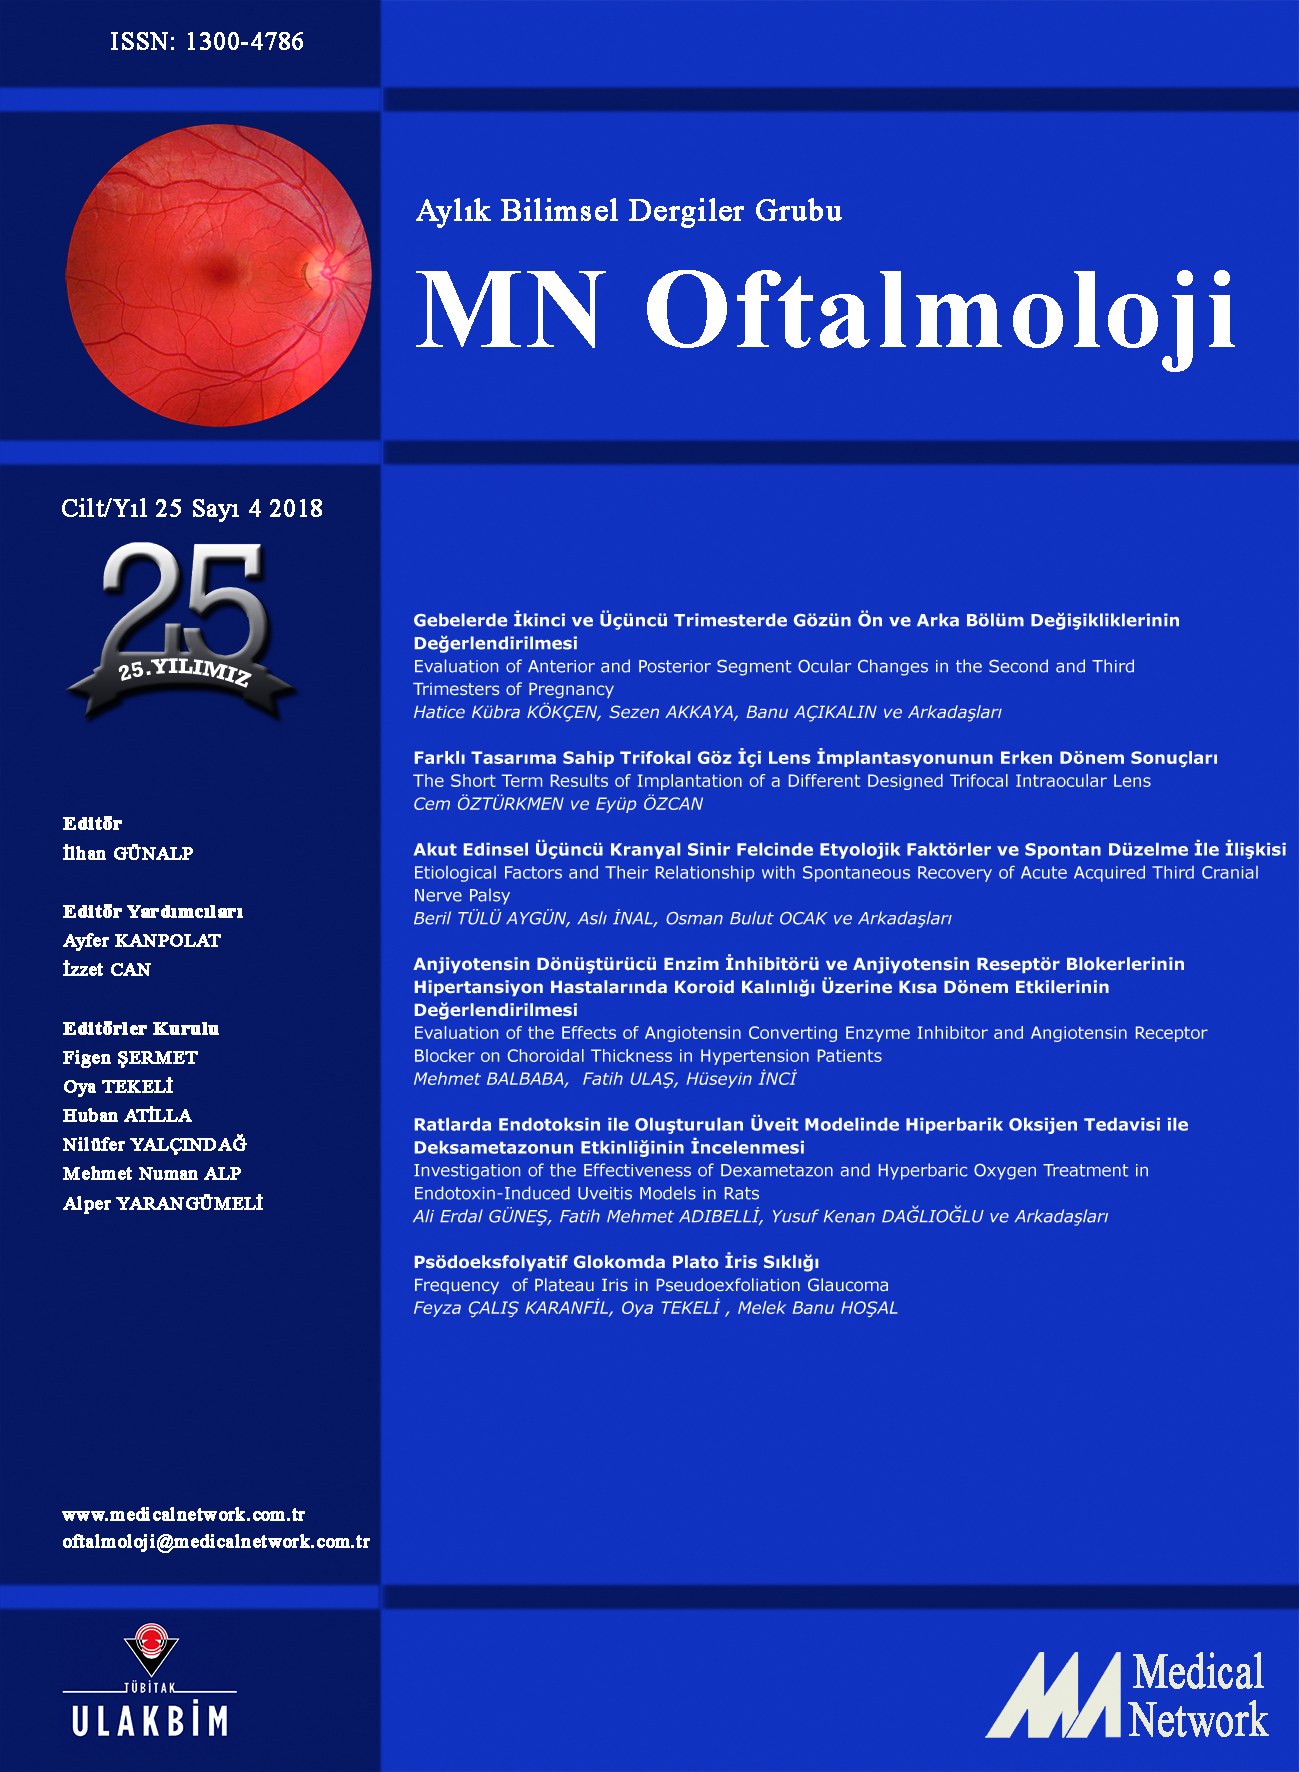 <div>MN Oftalmoloji Cilt: 25 Say: 4 2018 (MN Ophthalmology Volume: 25 No 4 2018)</div>